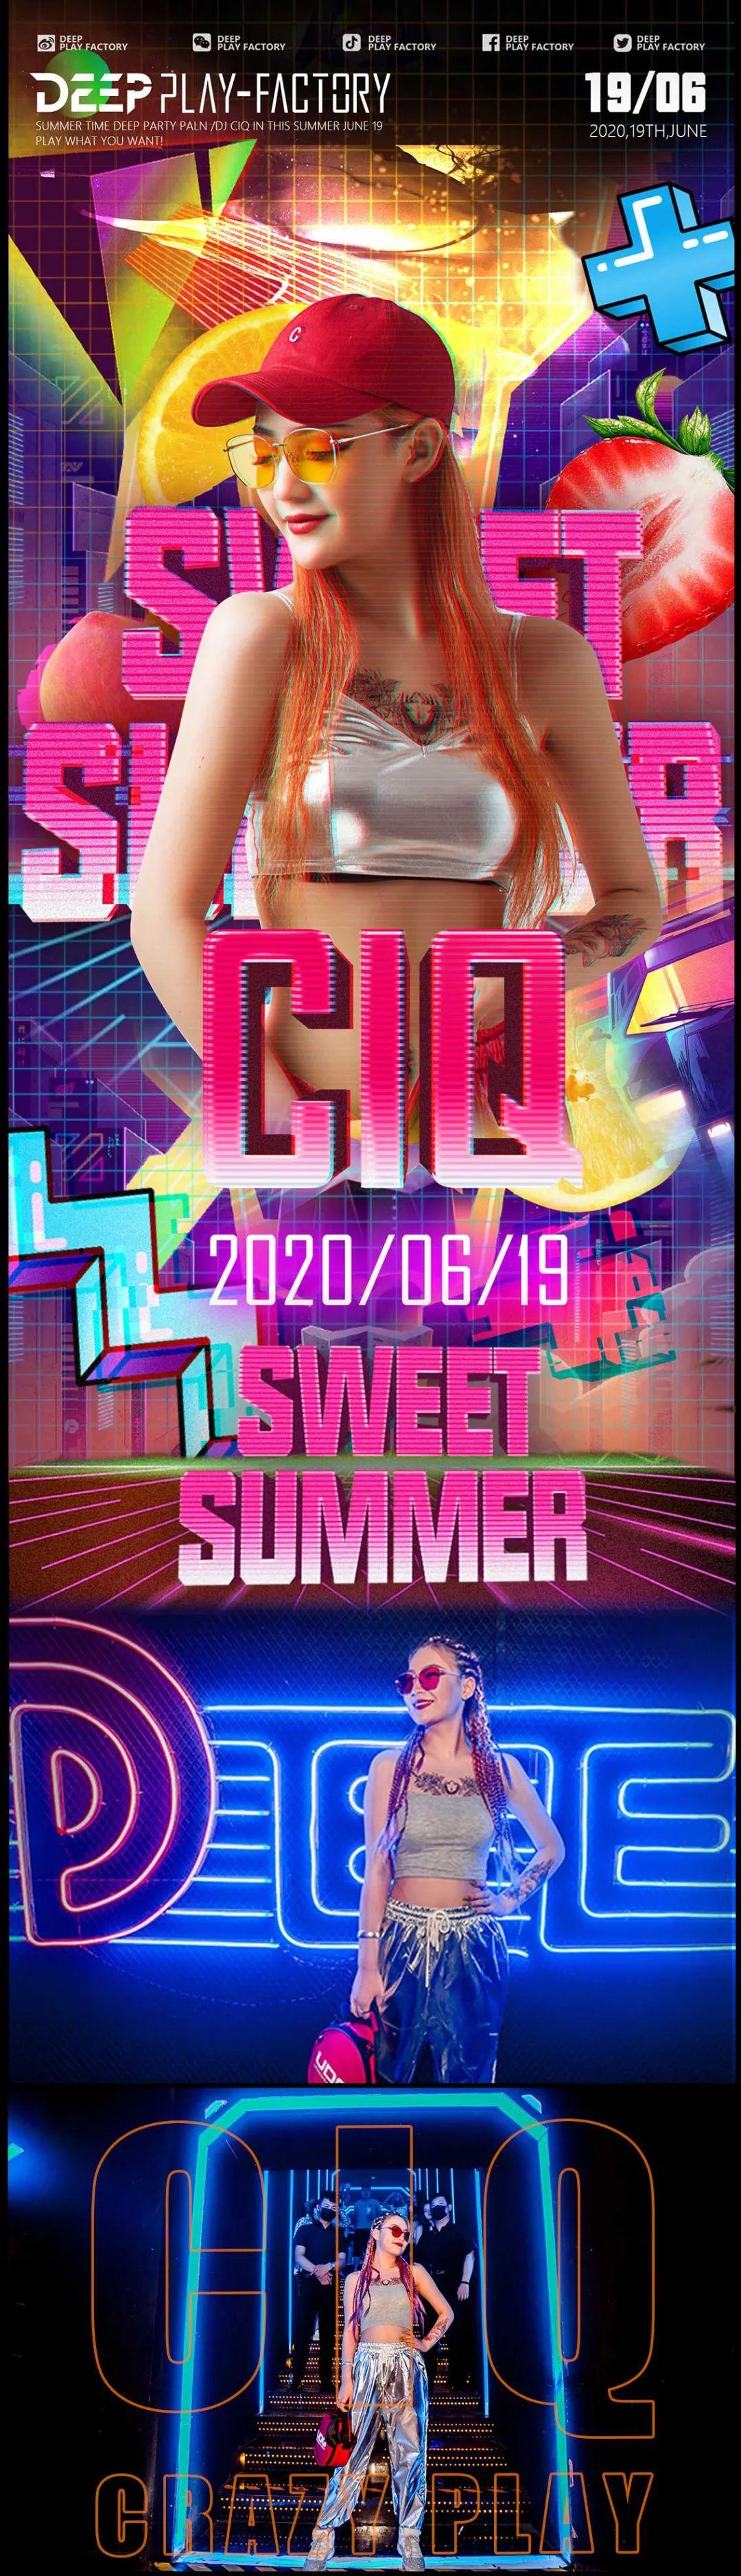 #SWEET SUMMER# DJ CIQ 音浪暴击 整夜上头-西安蒂蒲酒吧/DEEP CLUB